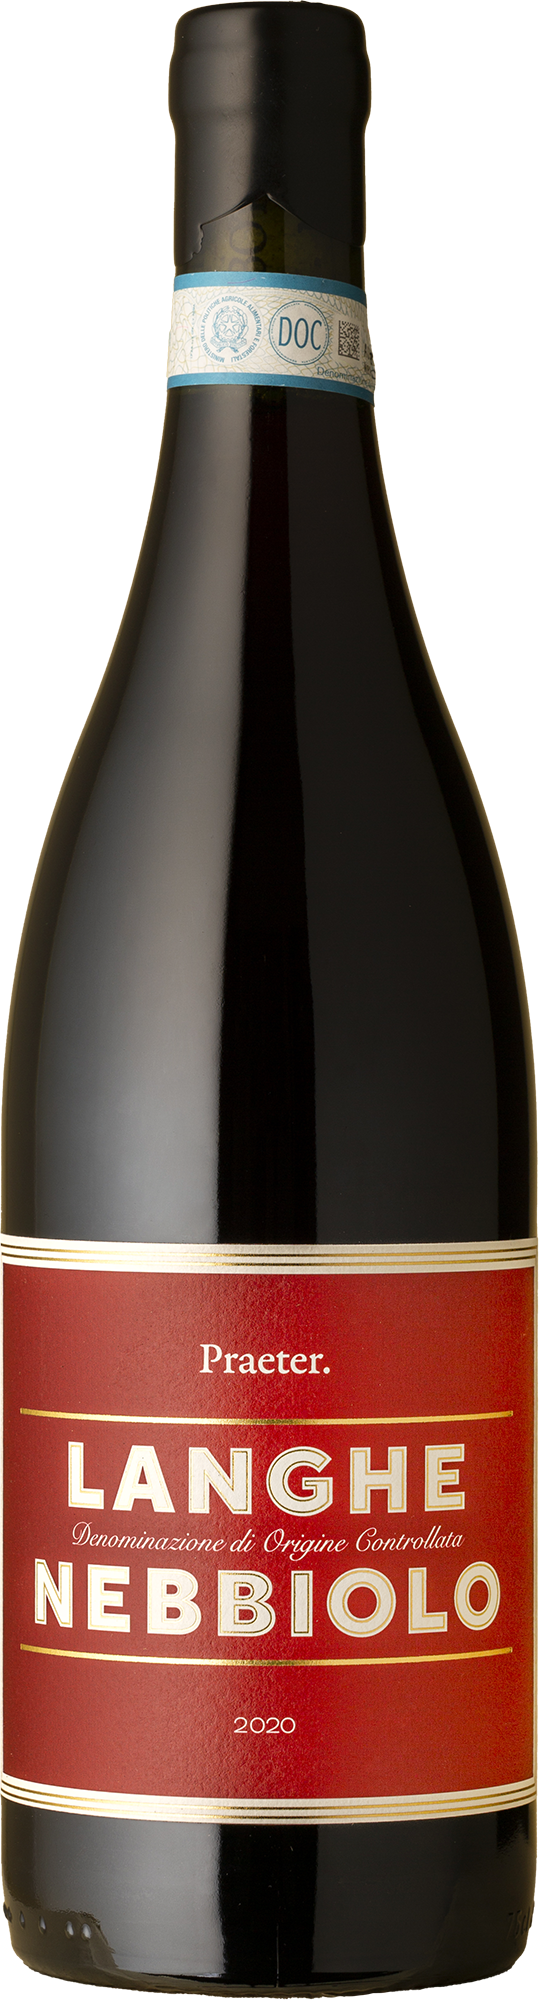 Praeter - Langhe Nebbiolo 2020 Red Wine